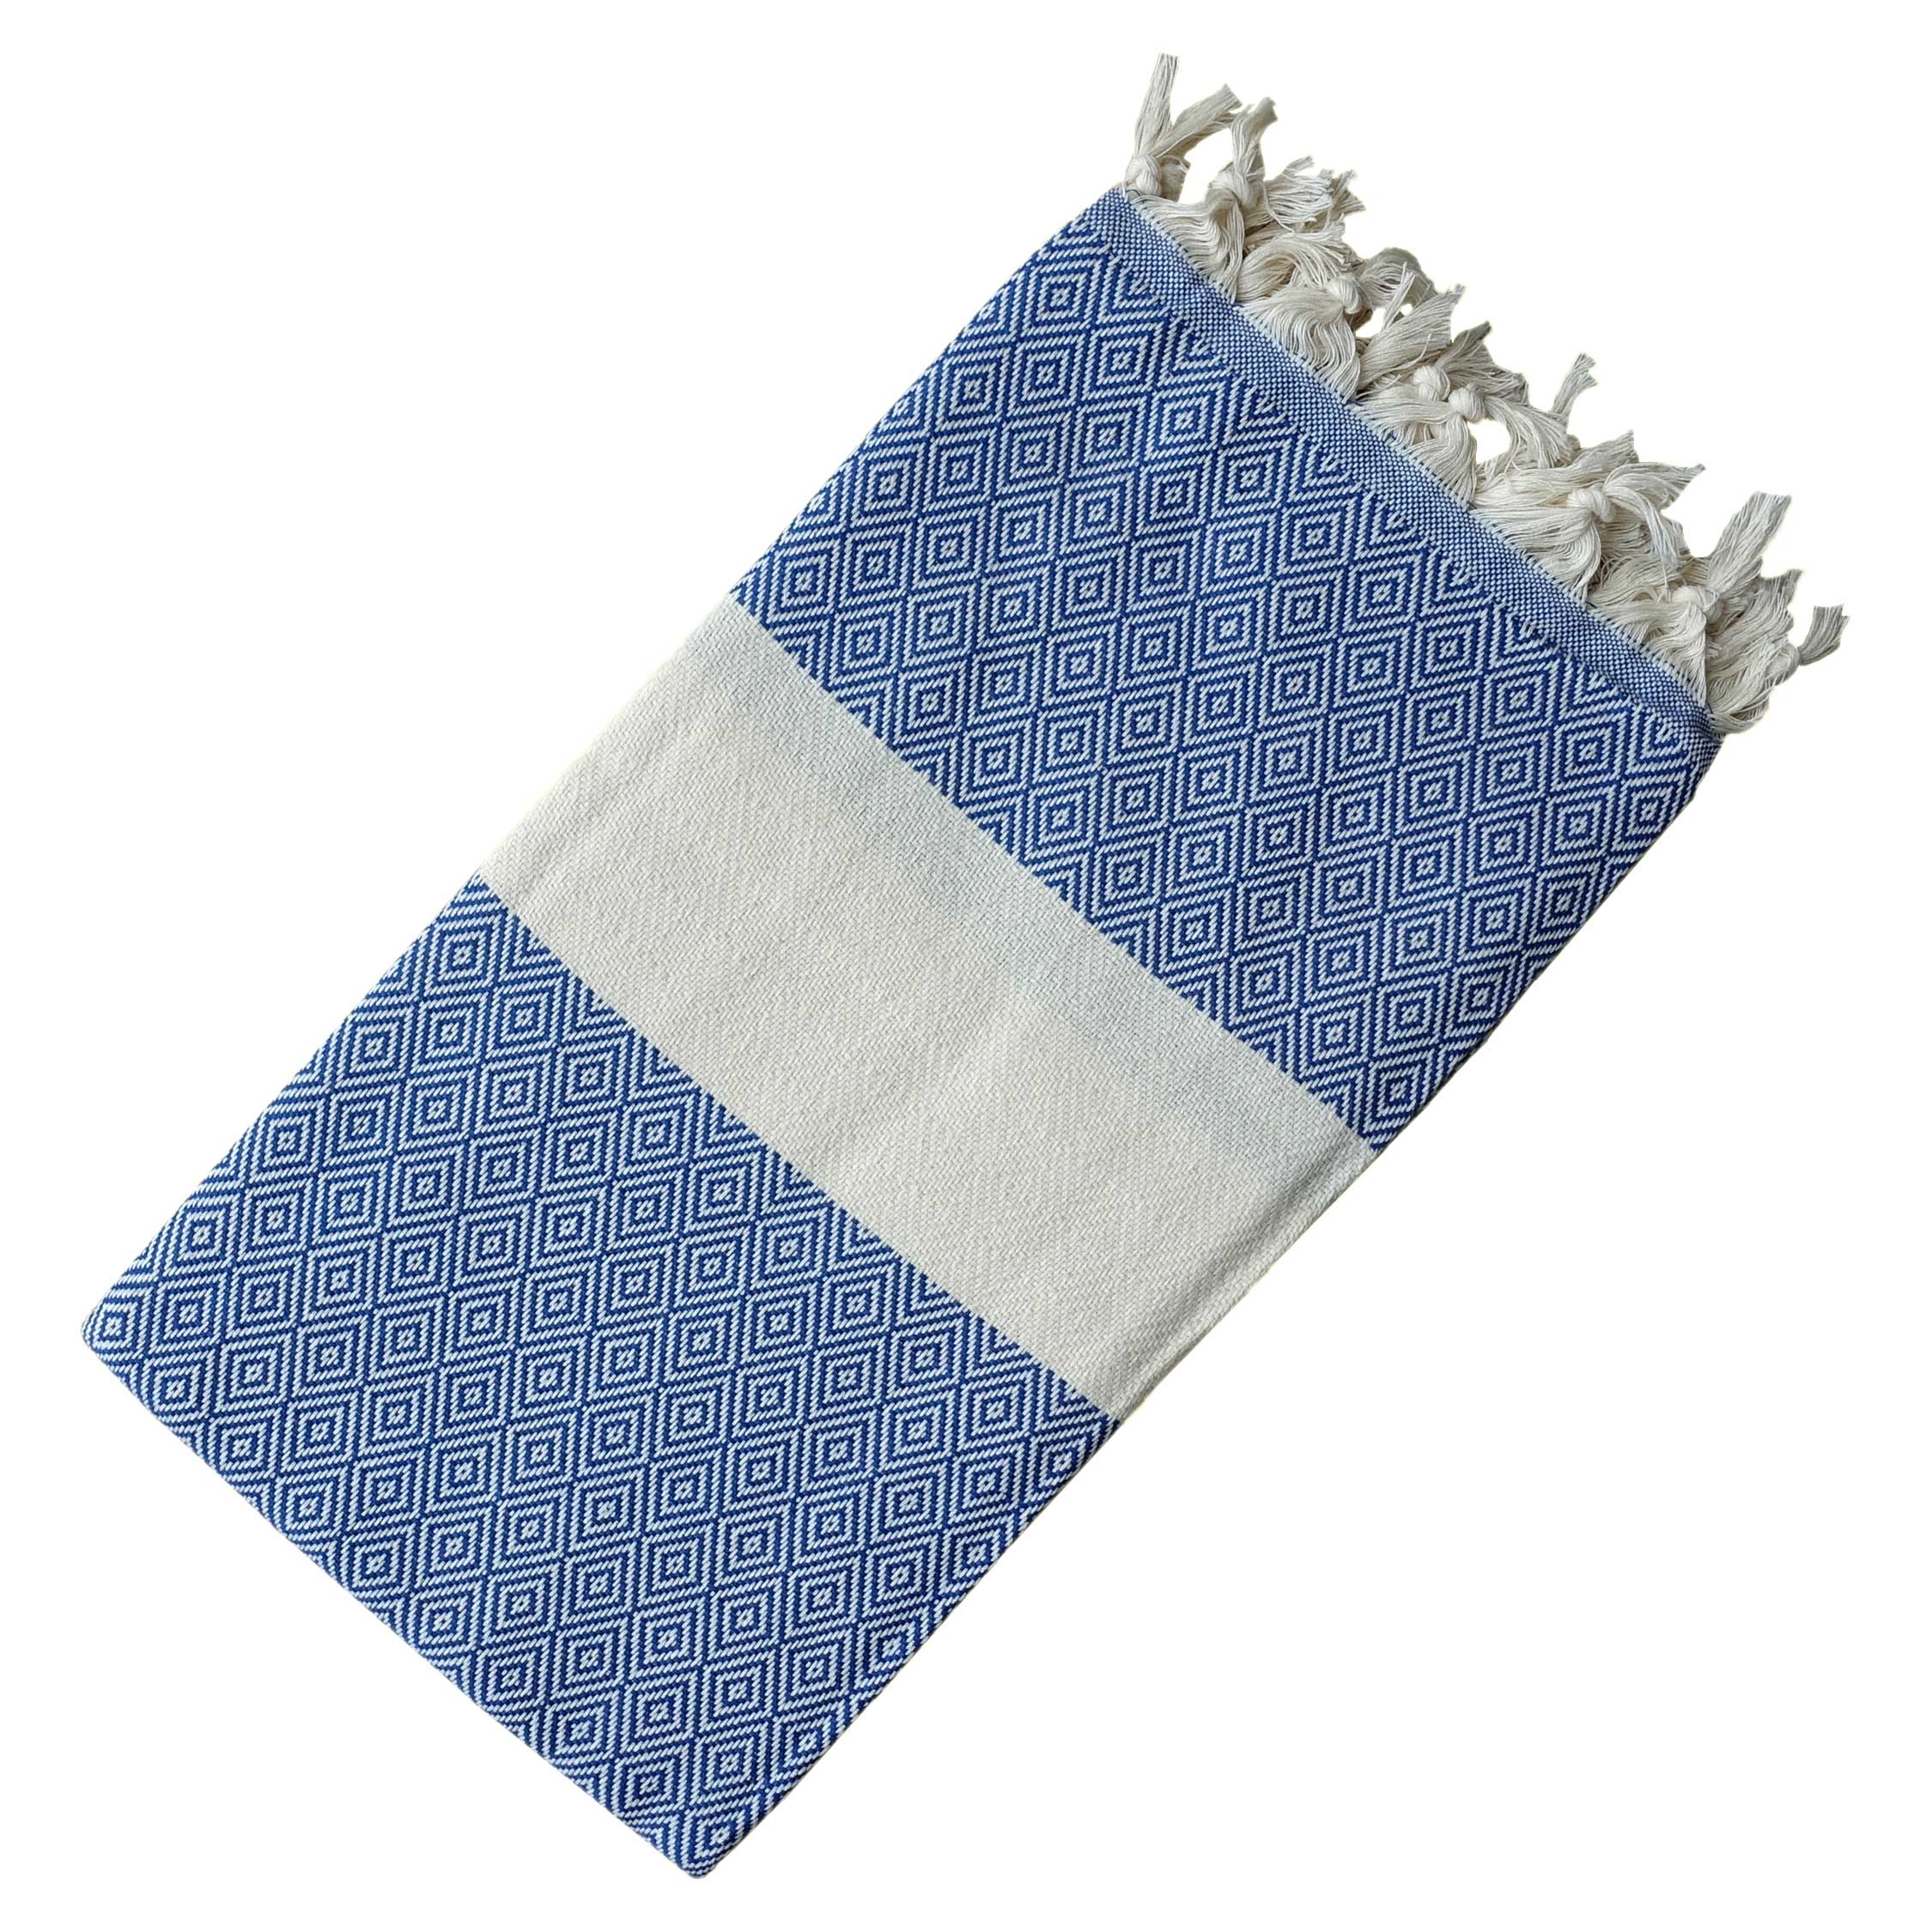 Naturally-Dyed Cotton Turkish Towel Peshtemal 71x39 Inches Navy Blue Dandelion Textile HERRINGBONE-NAVYBLUE Dandelion Herringbone Pattern